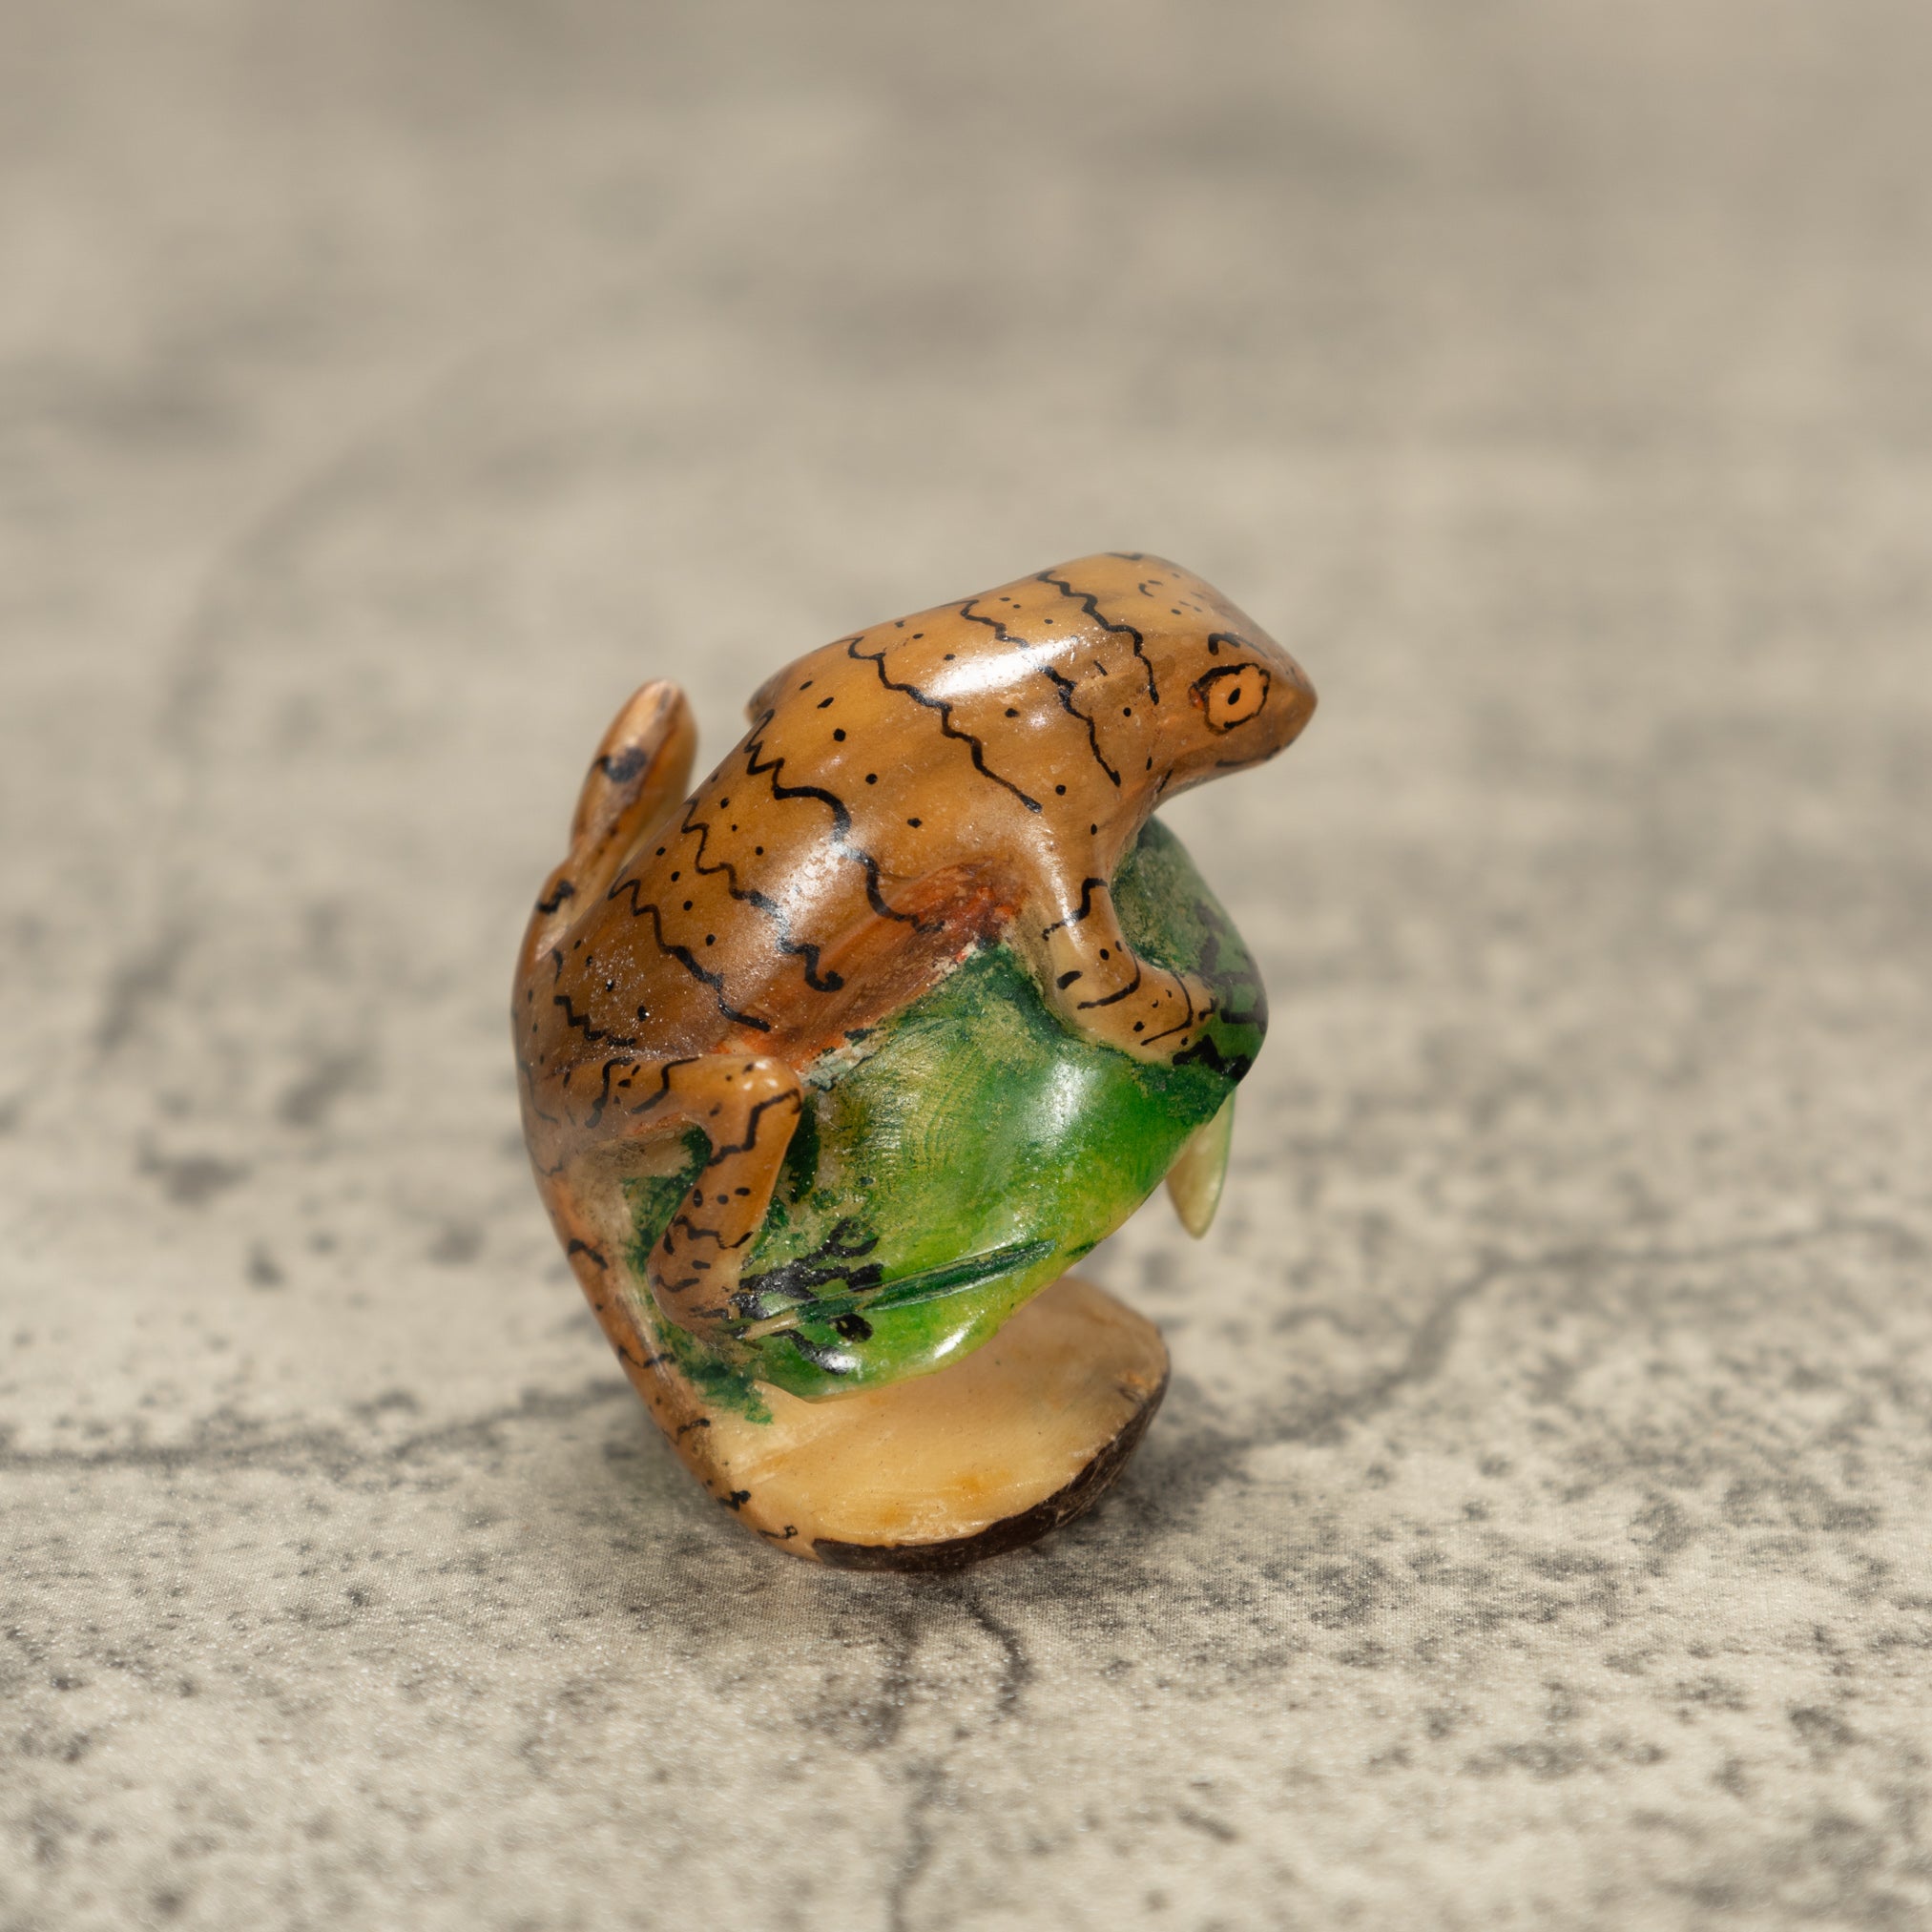 Gecko Lizard On Leaf Tagua Nut Carving